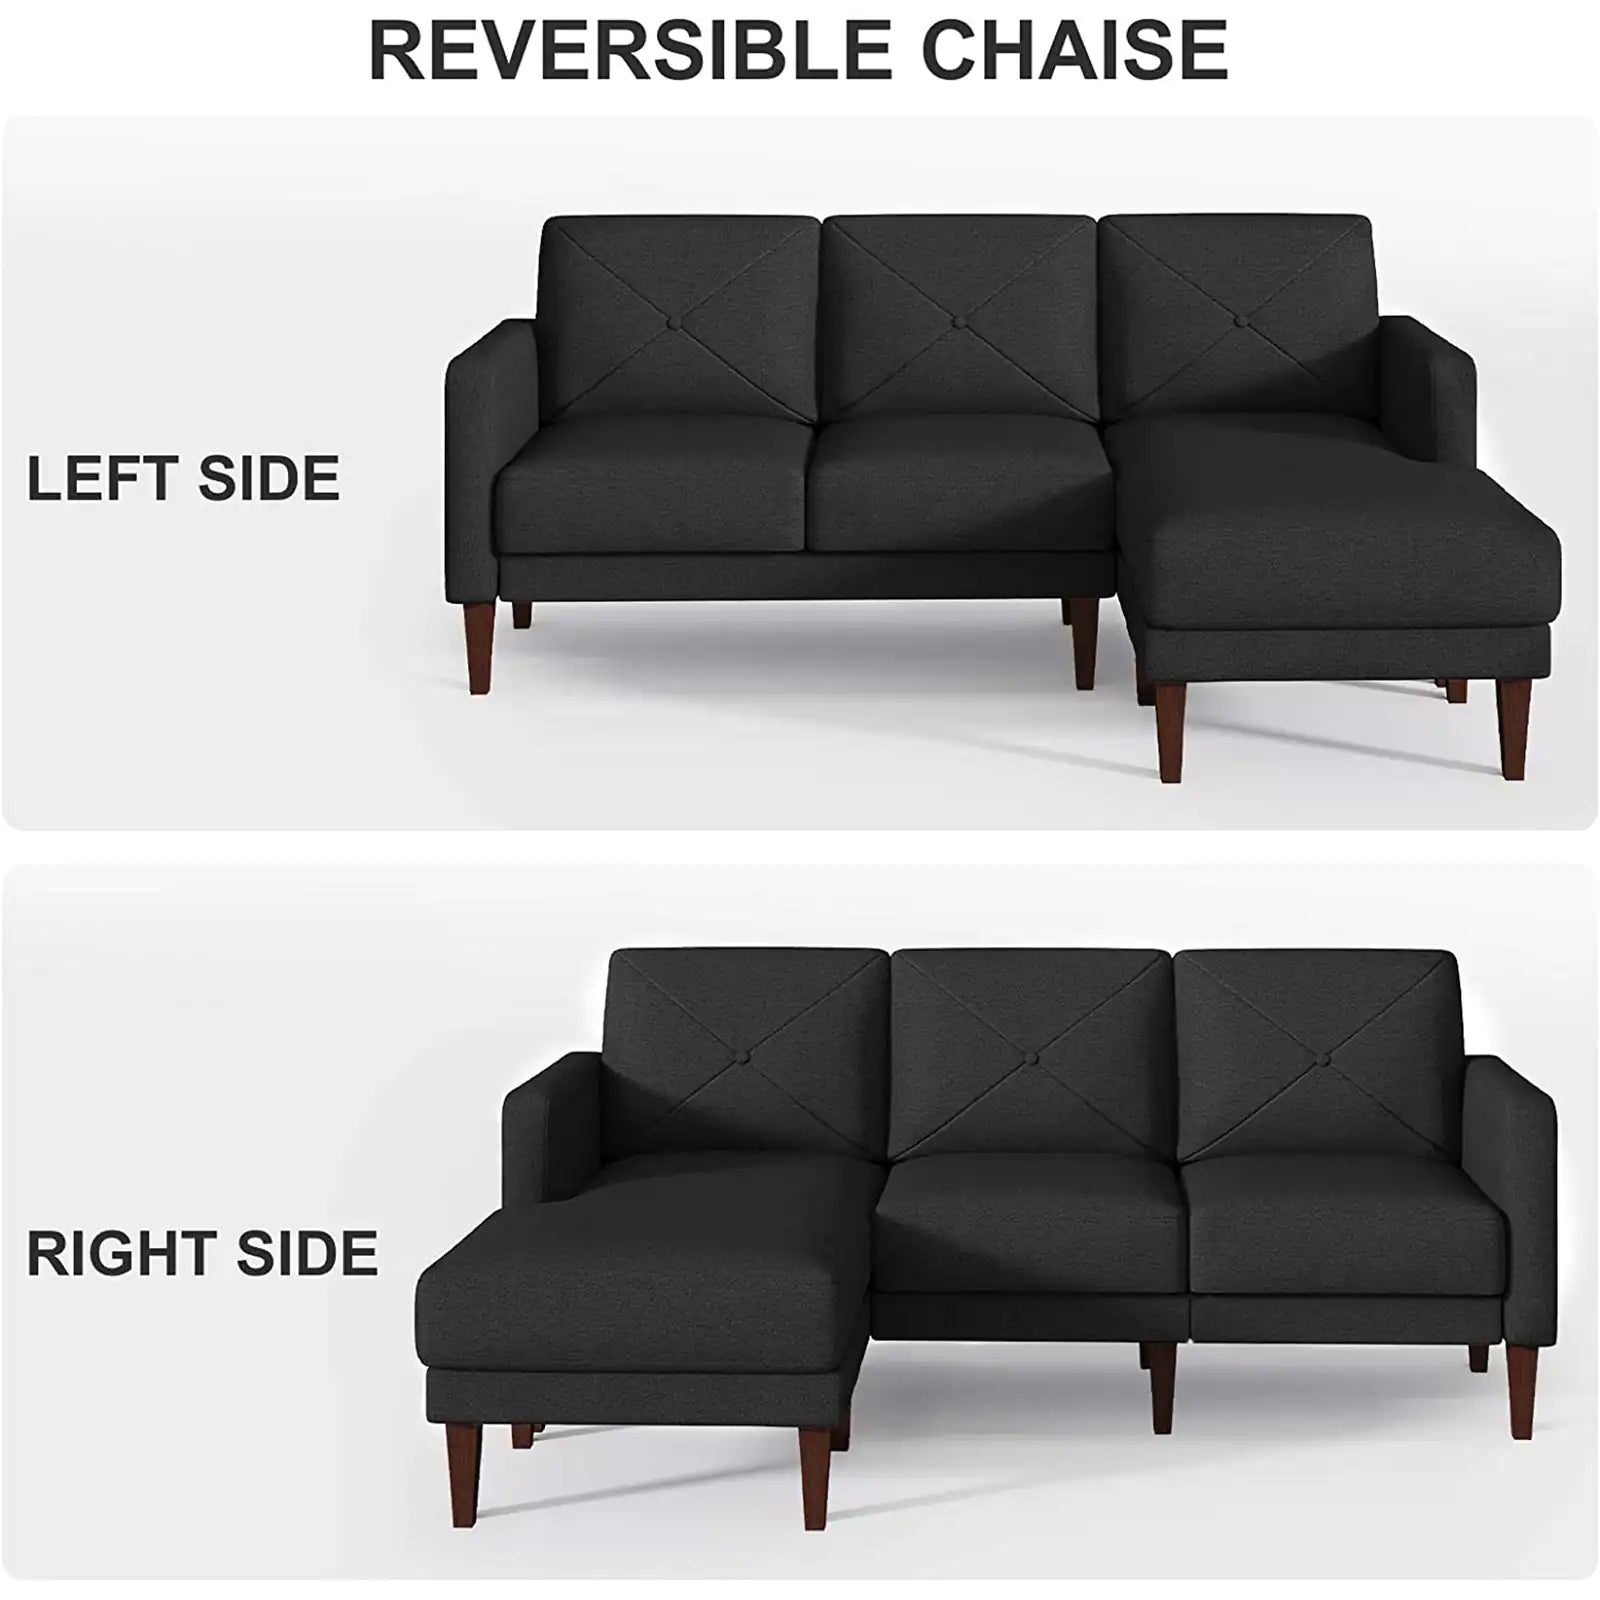 Sofá seccional convertible y reversible con chaise 